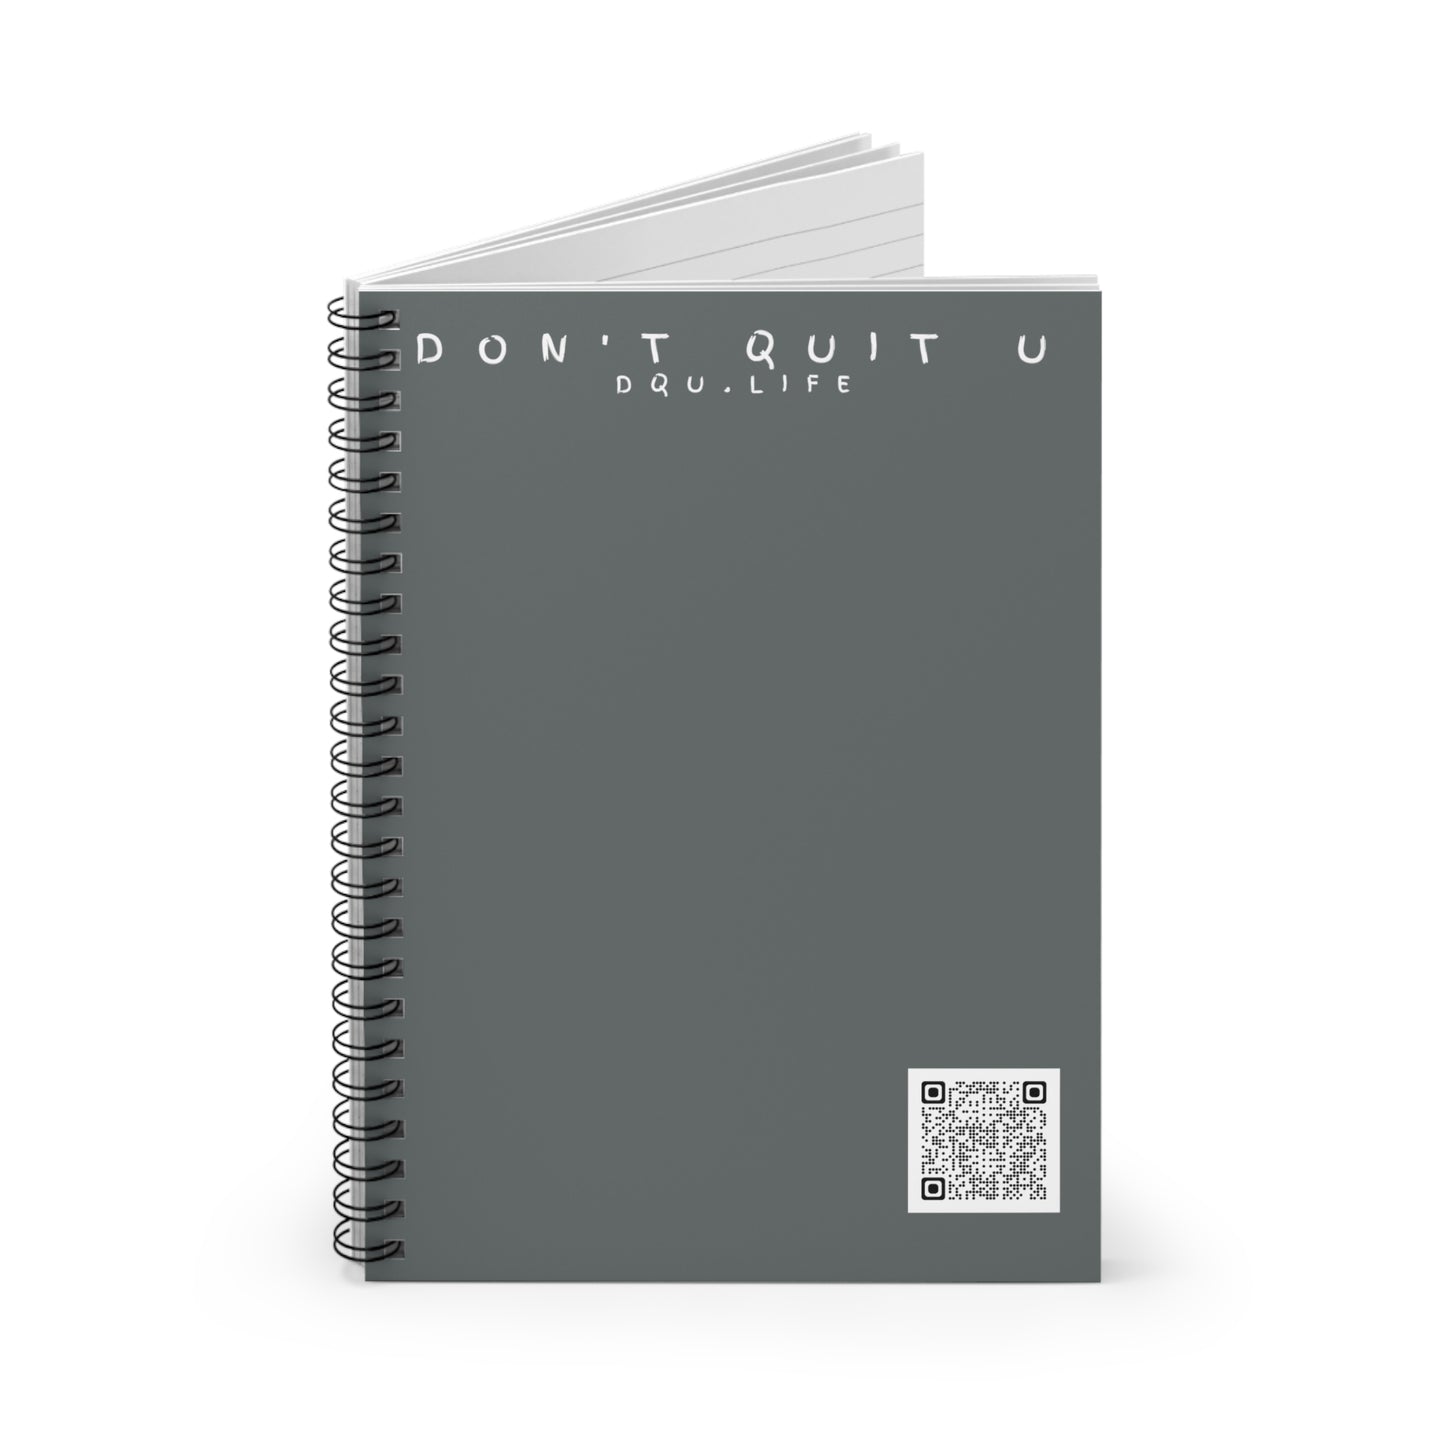 DQU.Life Spiral Notebook - Ruled Line